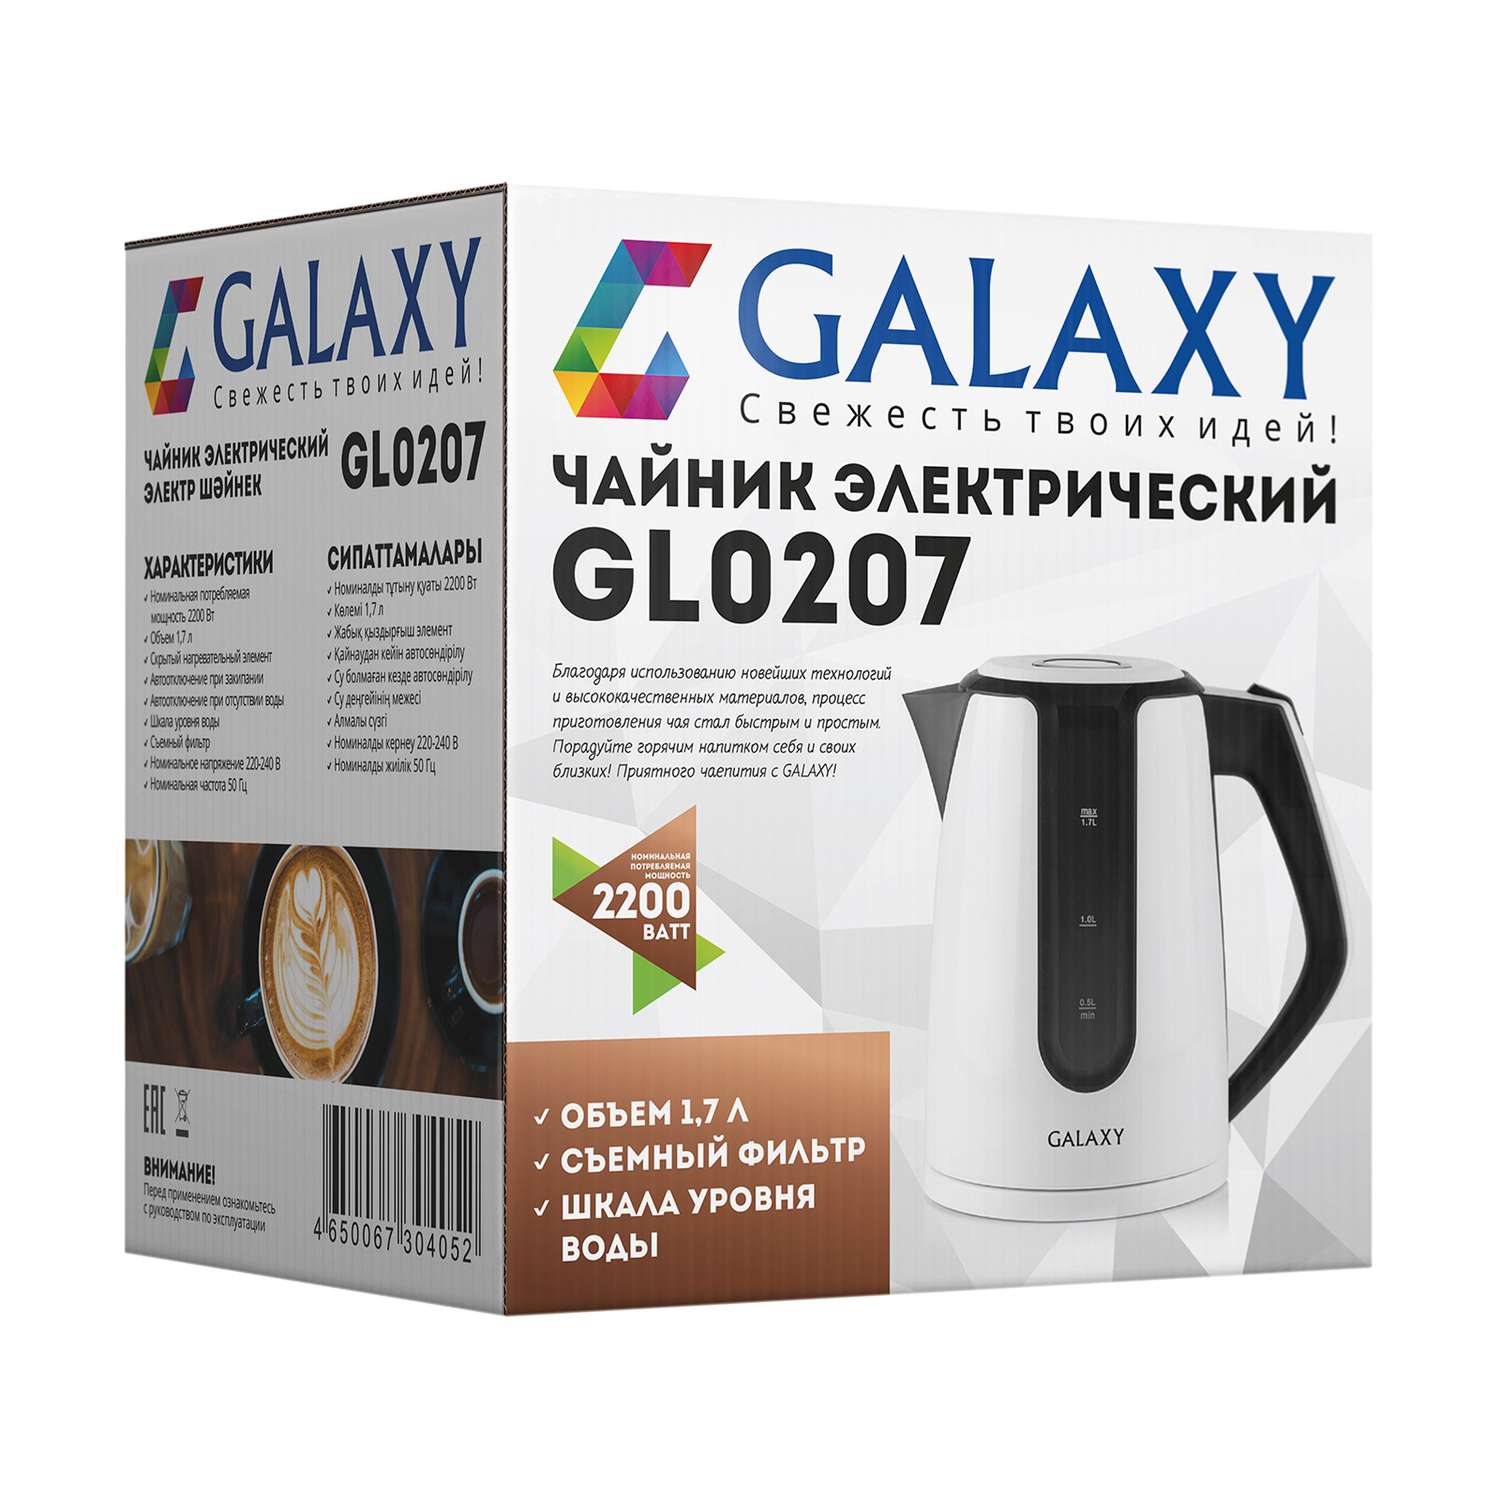 Чайник электрический Galaxy gl0207 - фото 5